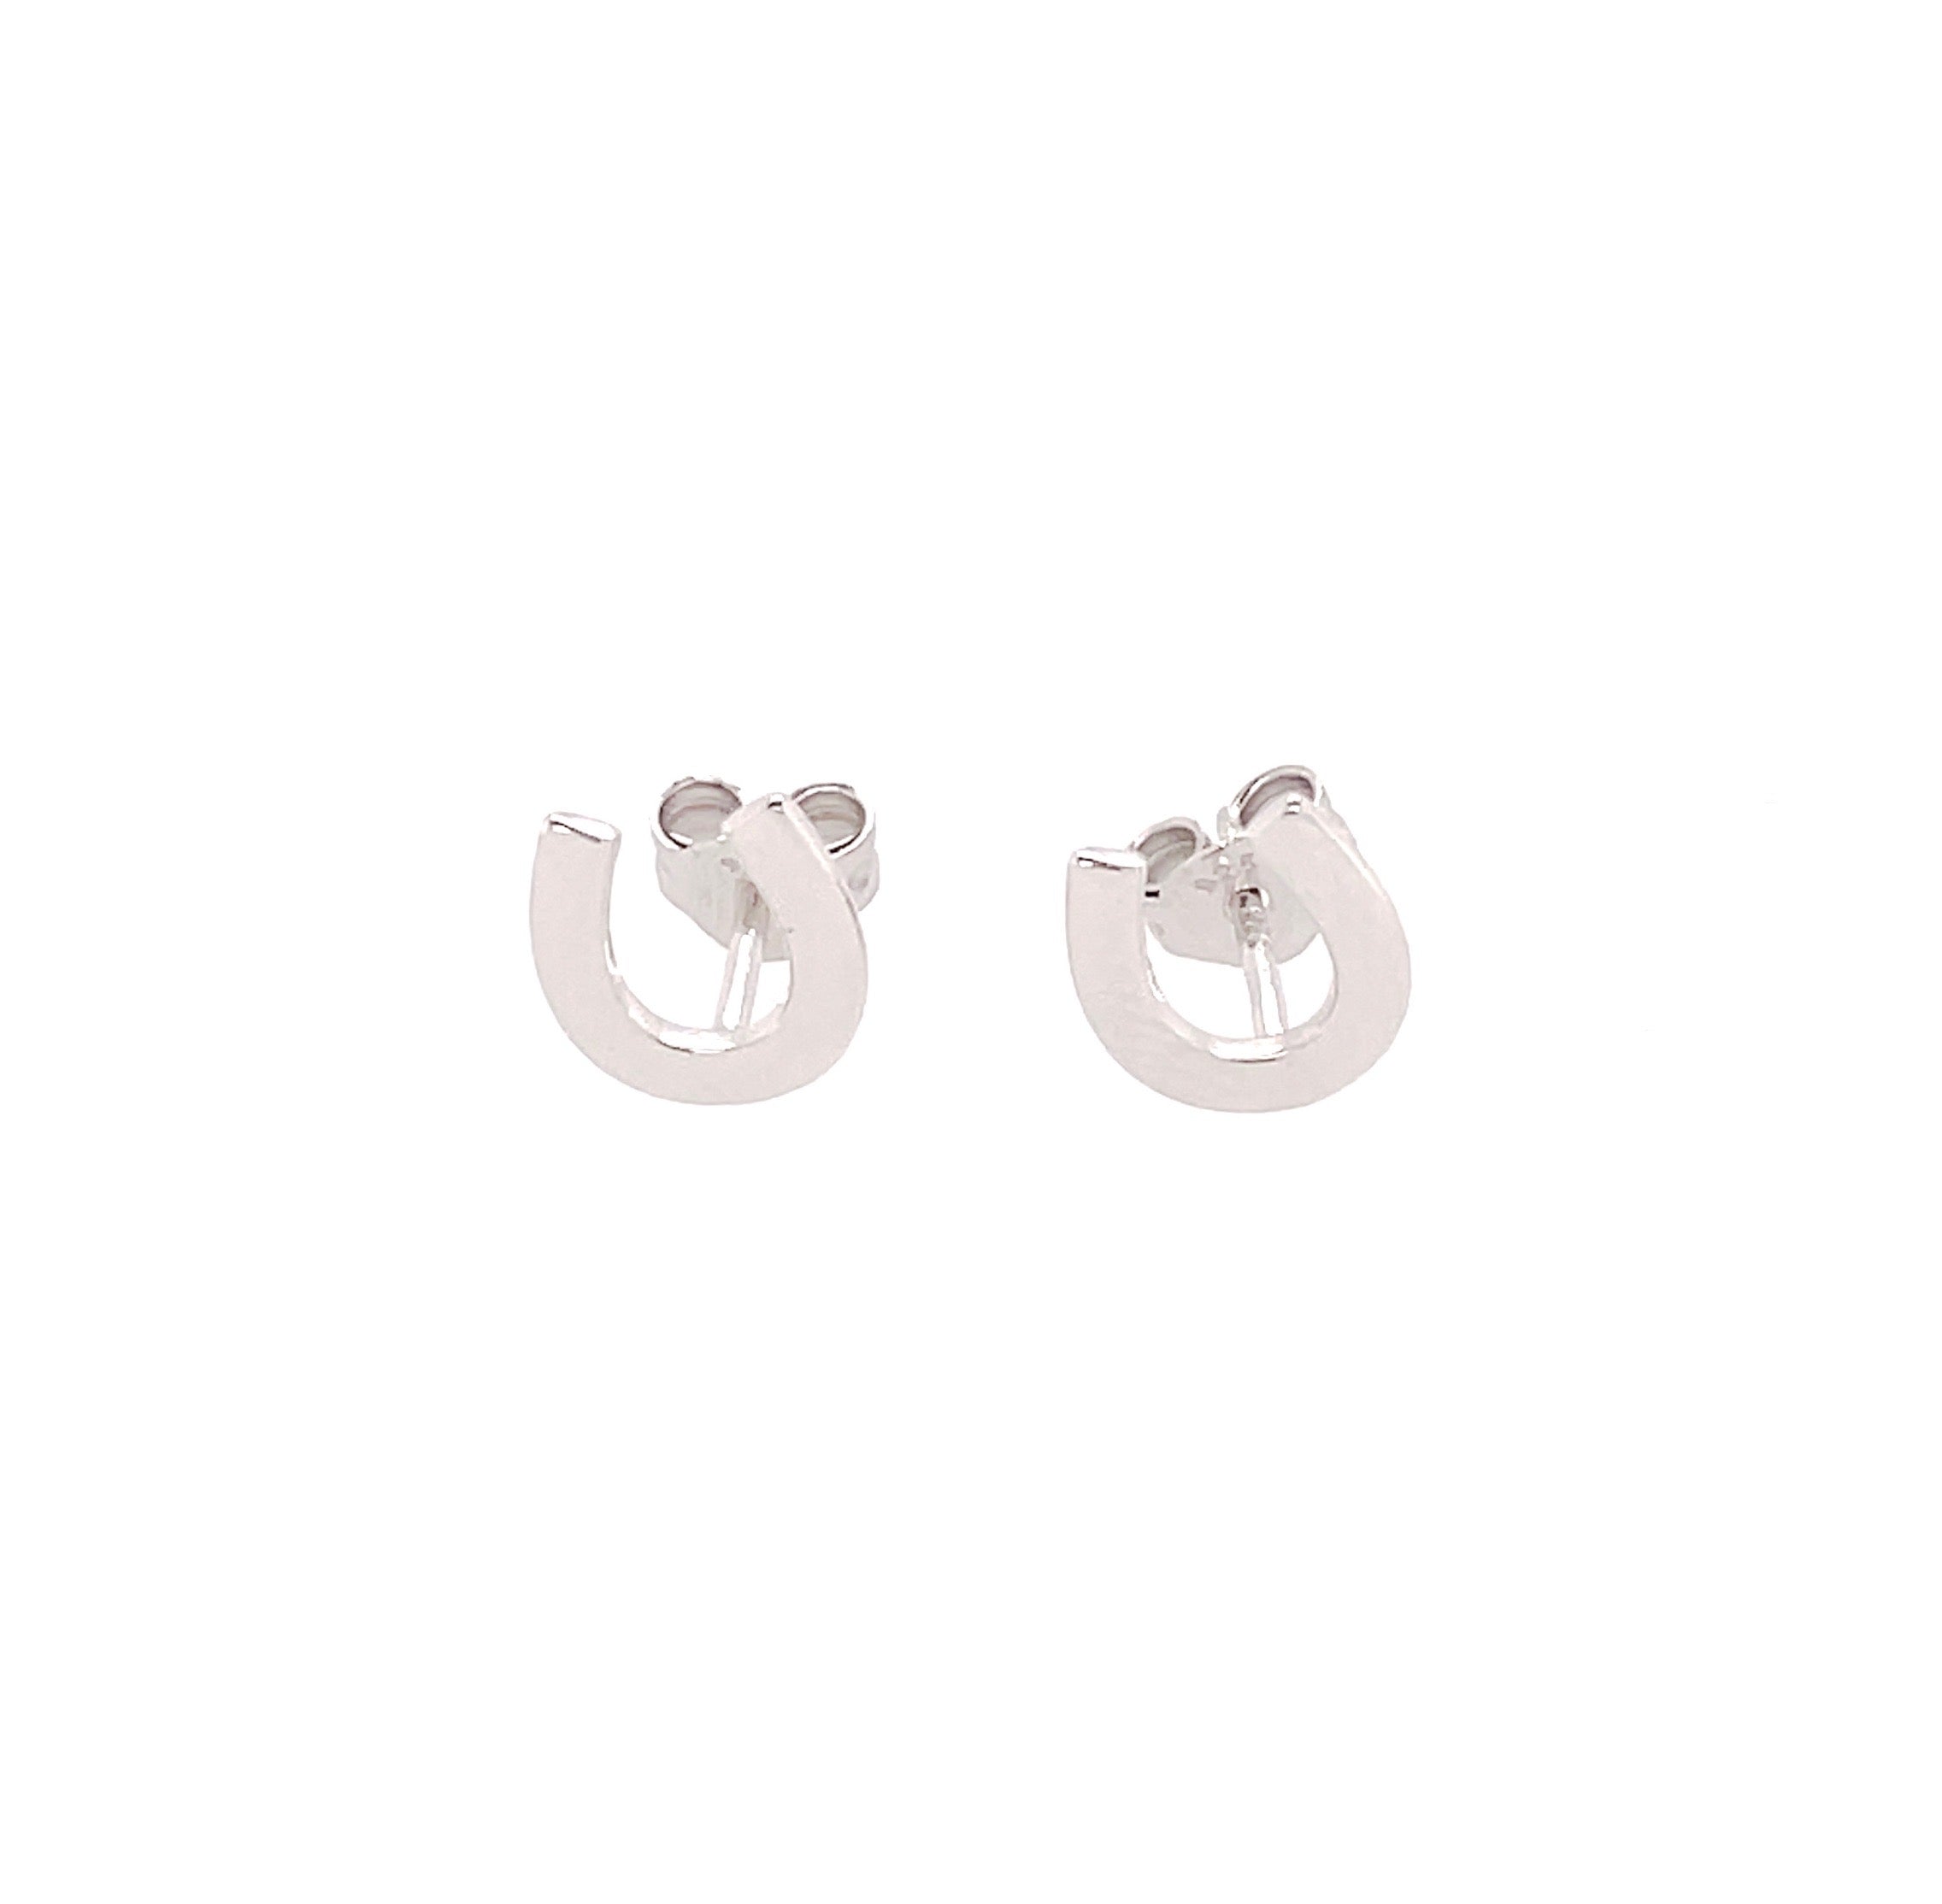 Simple sterling lucky horseshoe earrings